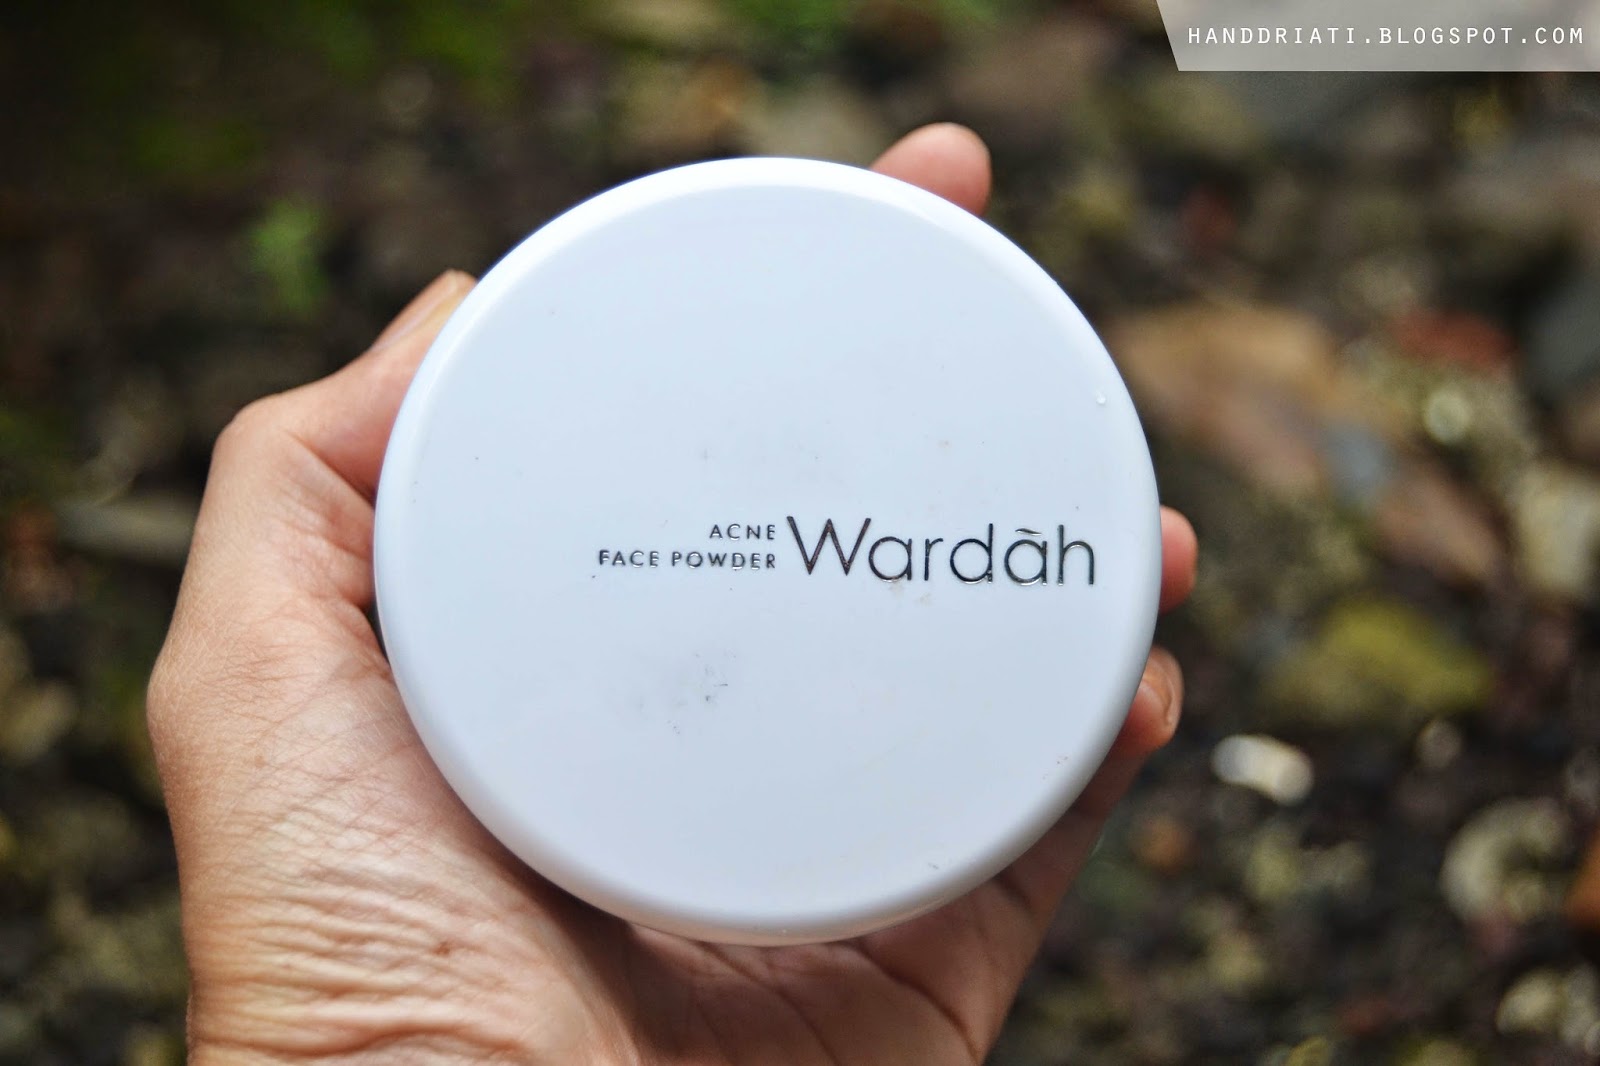 Review Bedak Tabur Wardah Face Powder Acne Series  One 